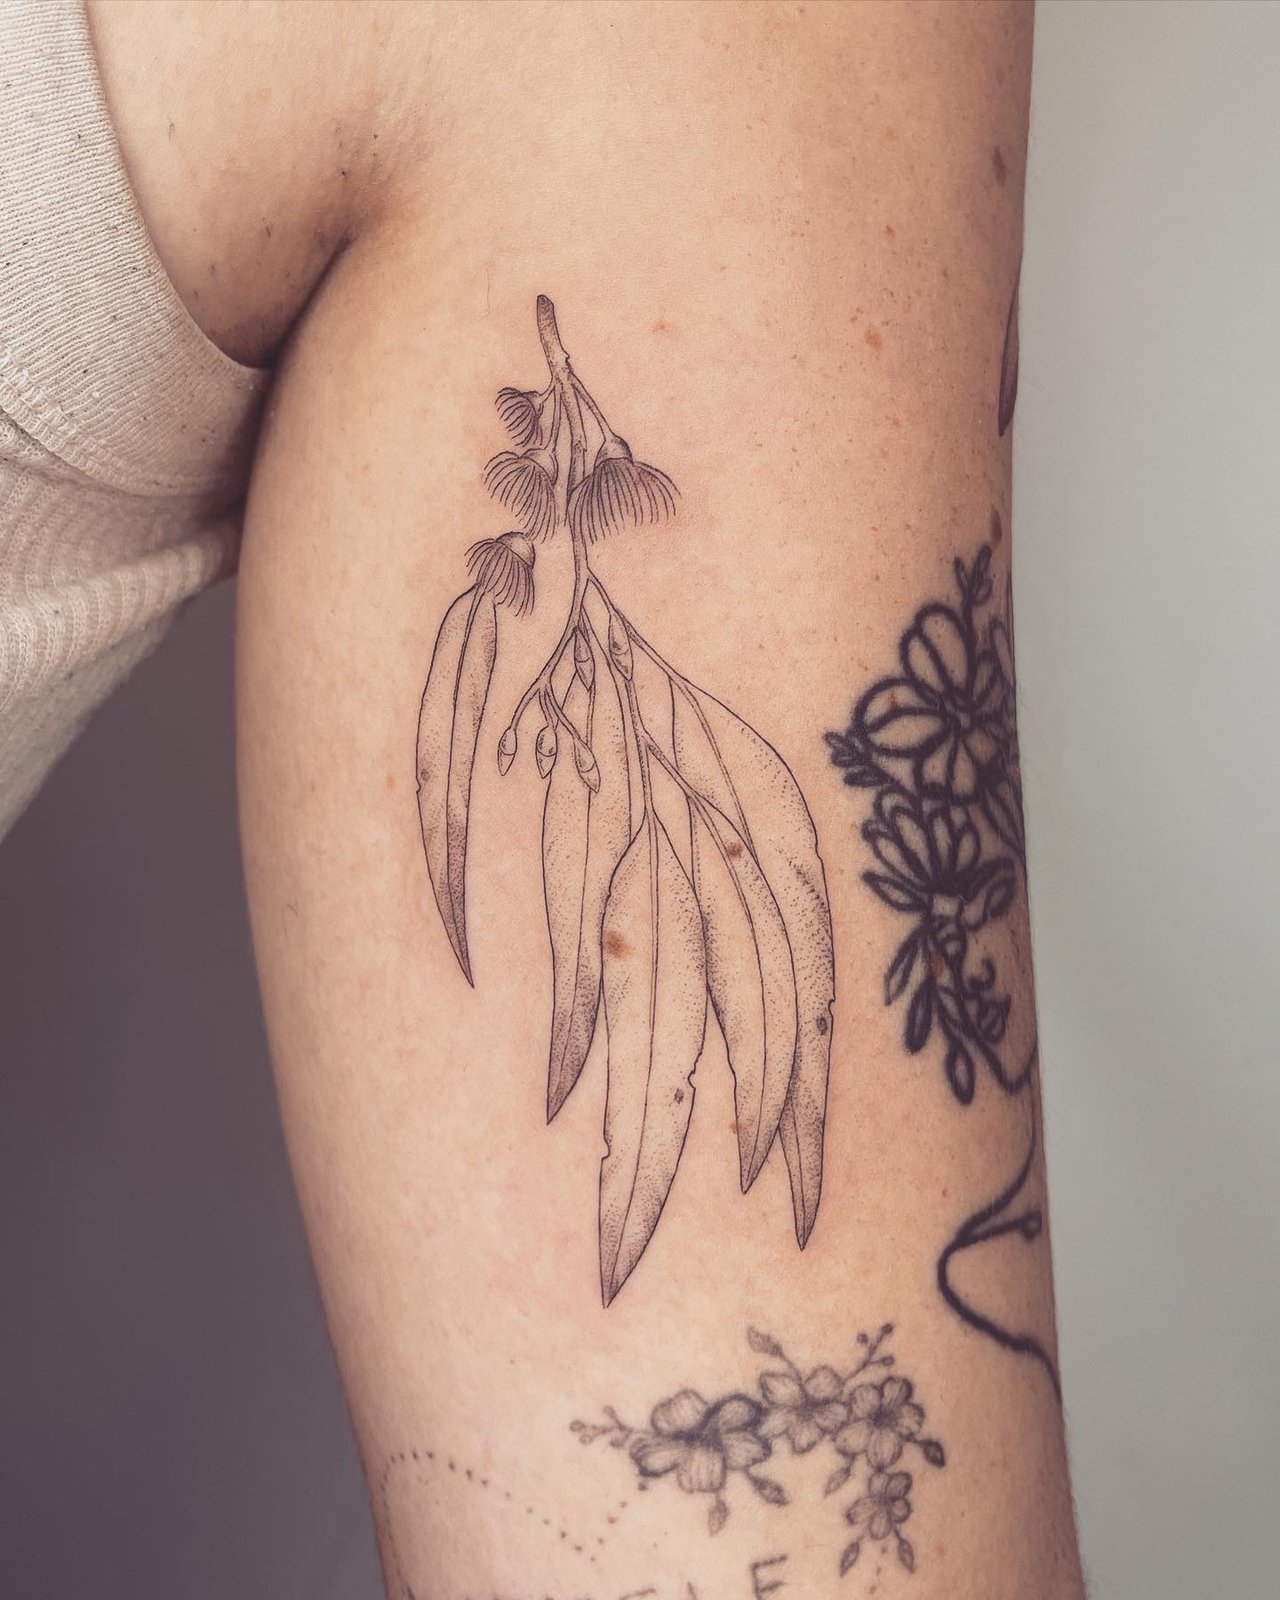 Faye Oliver on Instagram: “✽ Eucalyptus, lavender + Fern✽ @evergreentattoos  ⠀⠀⠀⠀⠀⠀⠀⠀⠀⠀⠀⠀⠀⠀⠀⠀⠀⠀⠀⠀⠀⠀⠀⠀ ⠀⠀⠀⠀⠀⠀⠀⠀⠀⠀⠀⠀⠀⠀⠀⠀⠀… | Fern tattoo, Lavender tattoo,  Olive tattoo